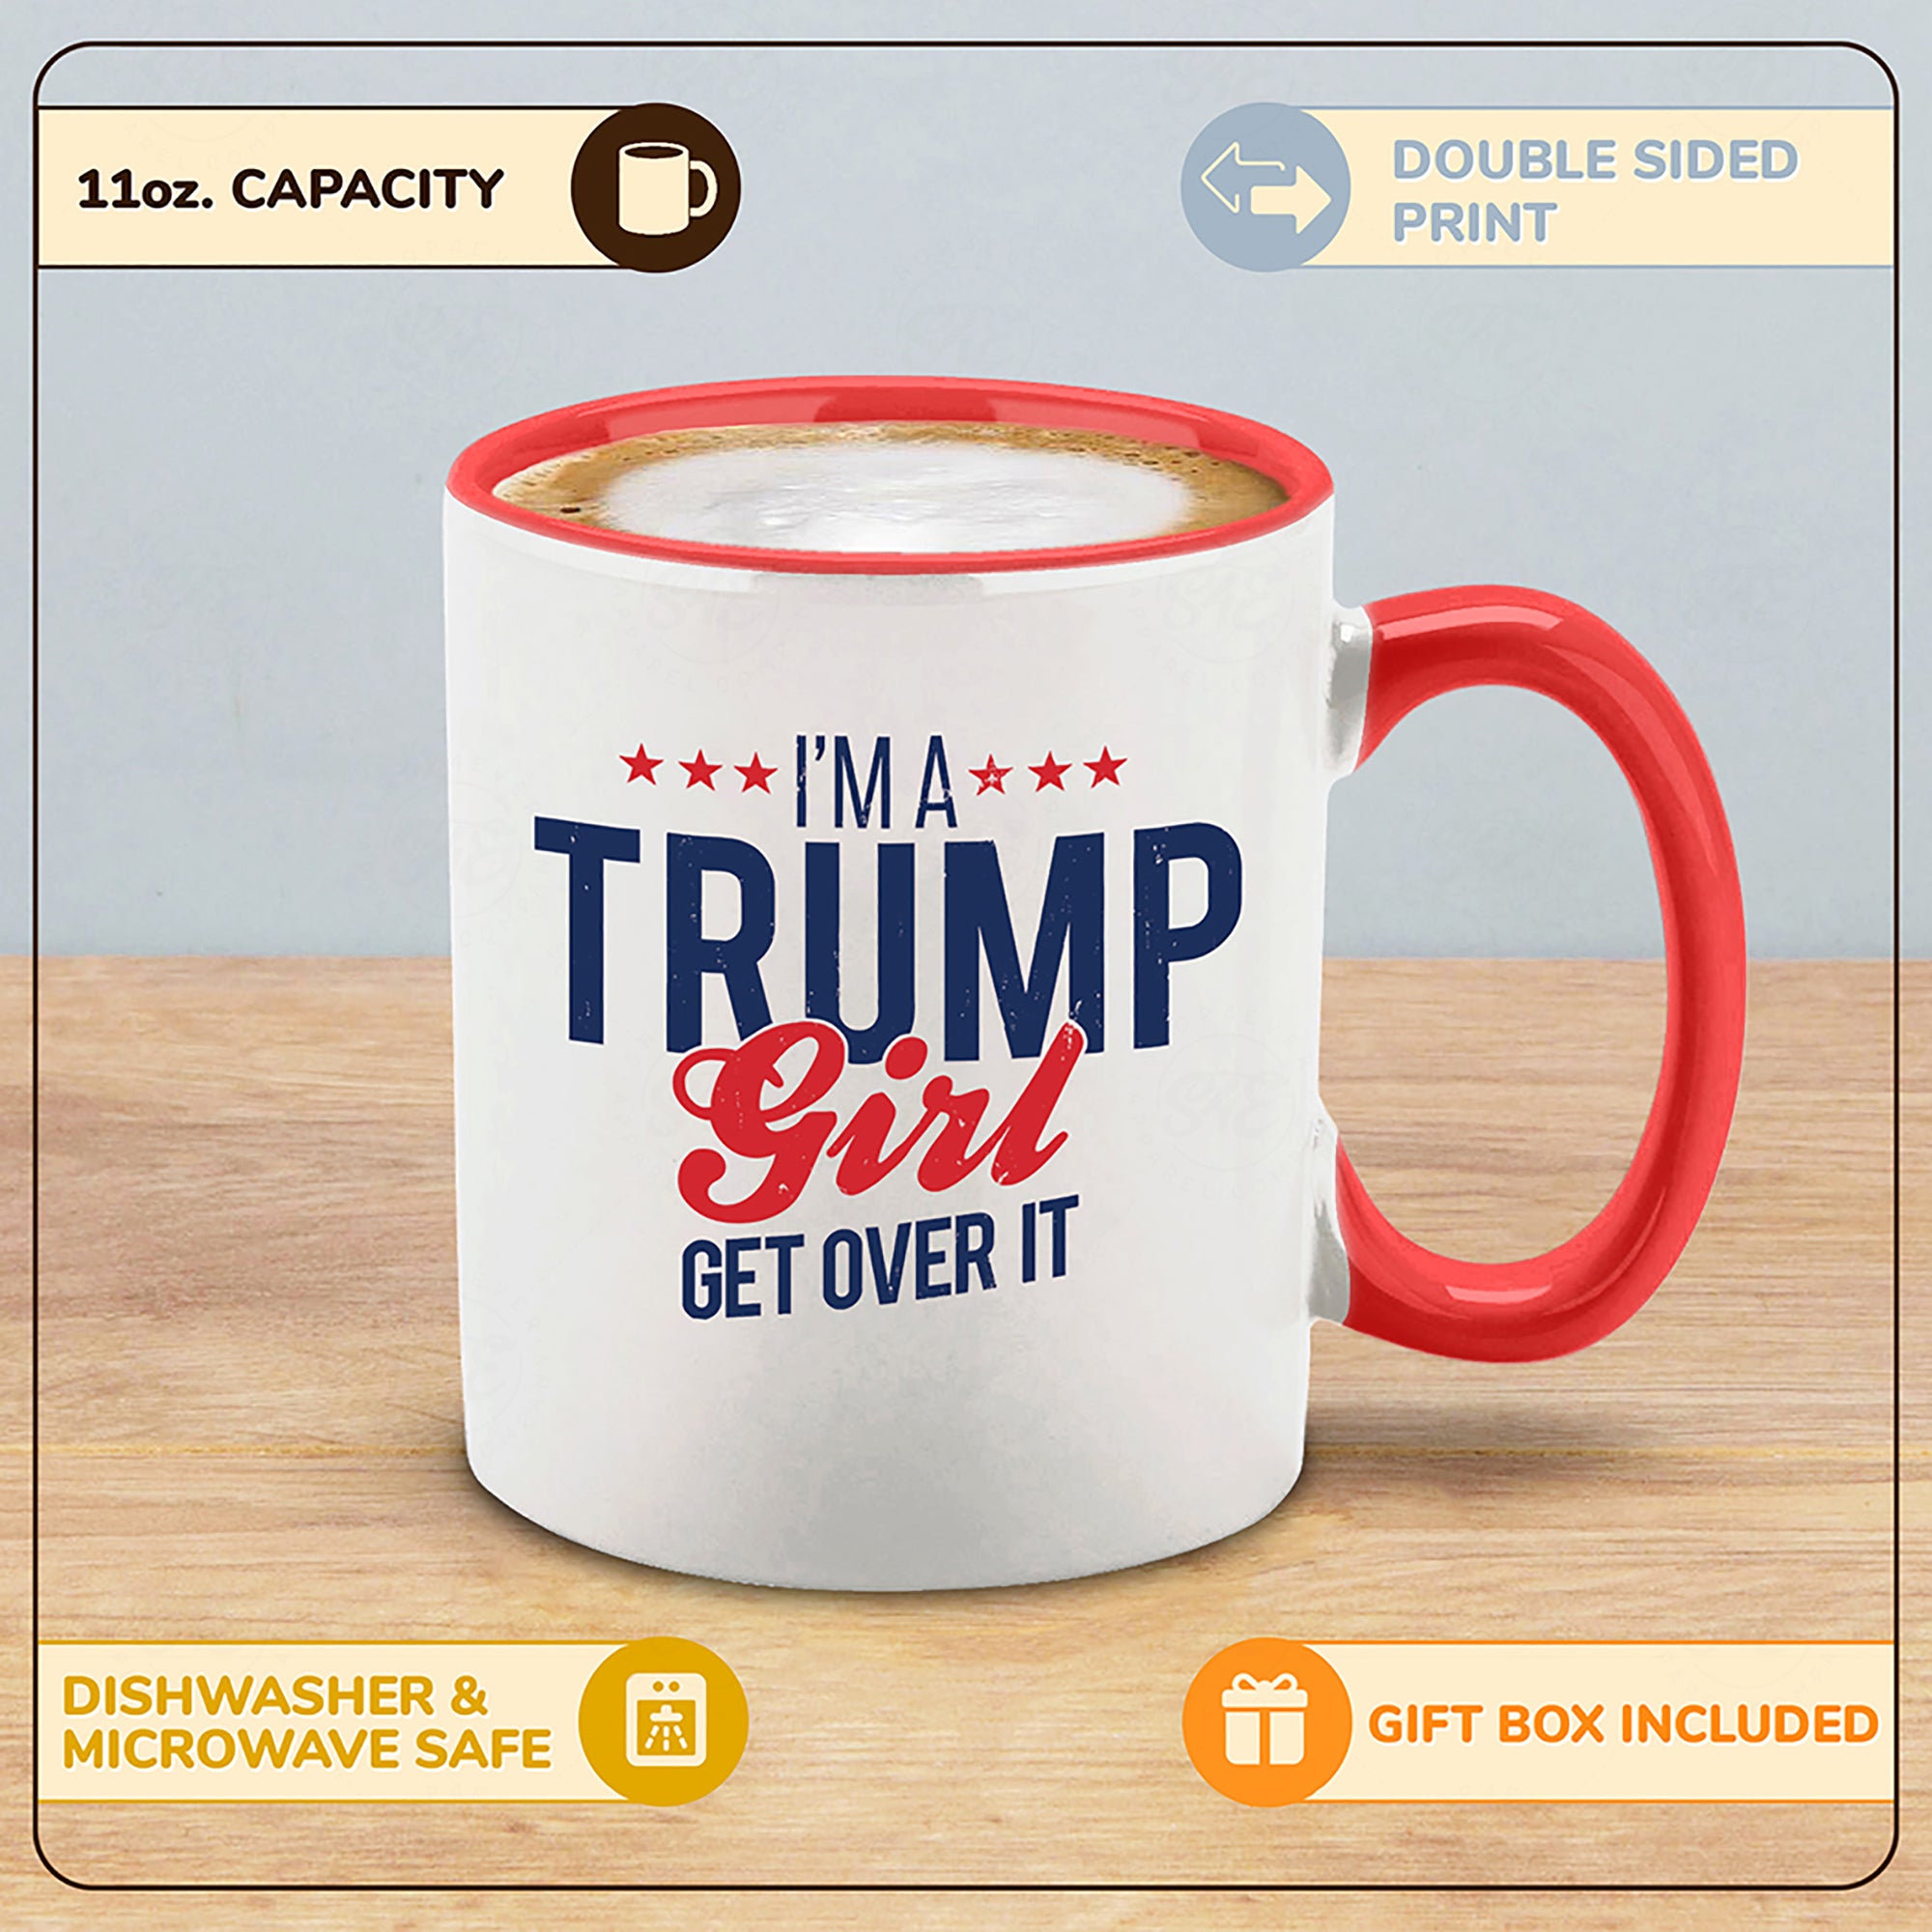 I'm A Trump Girl Get Over It Stars Red Handle Ceramic Coffee Mug Tea Cup Donald Trump Mug